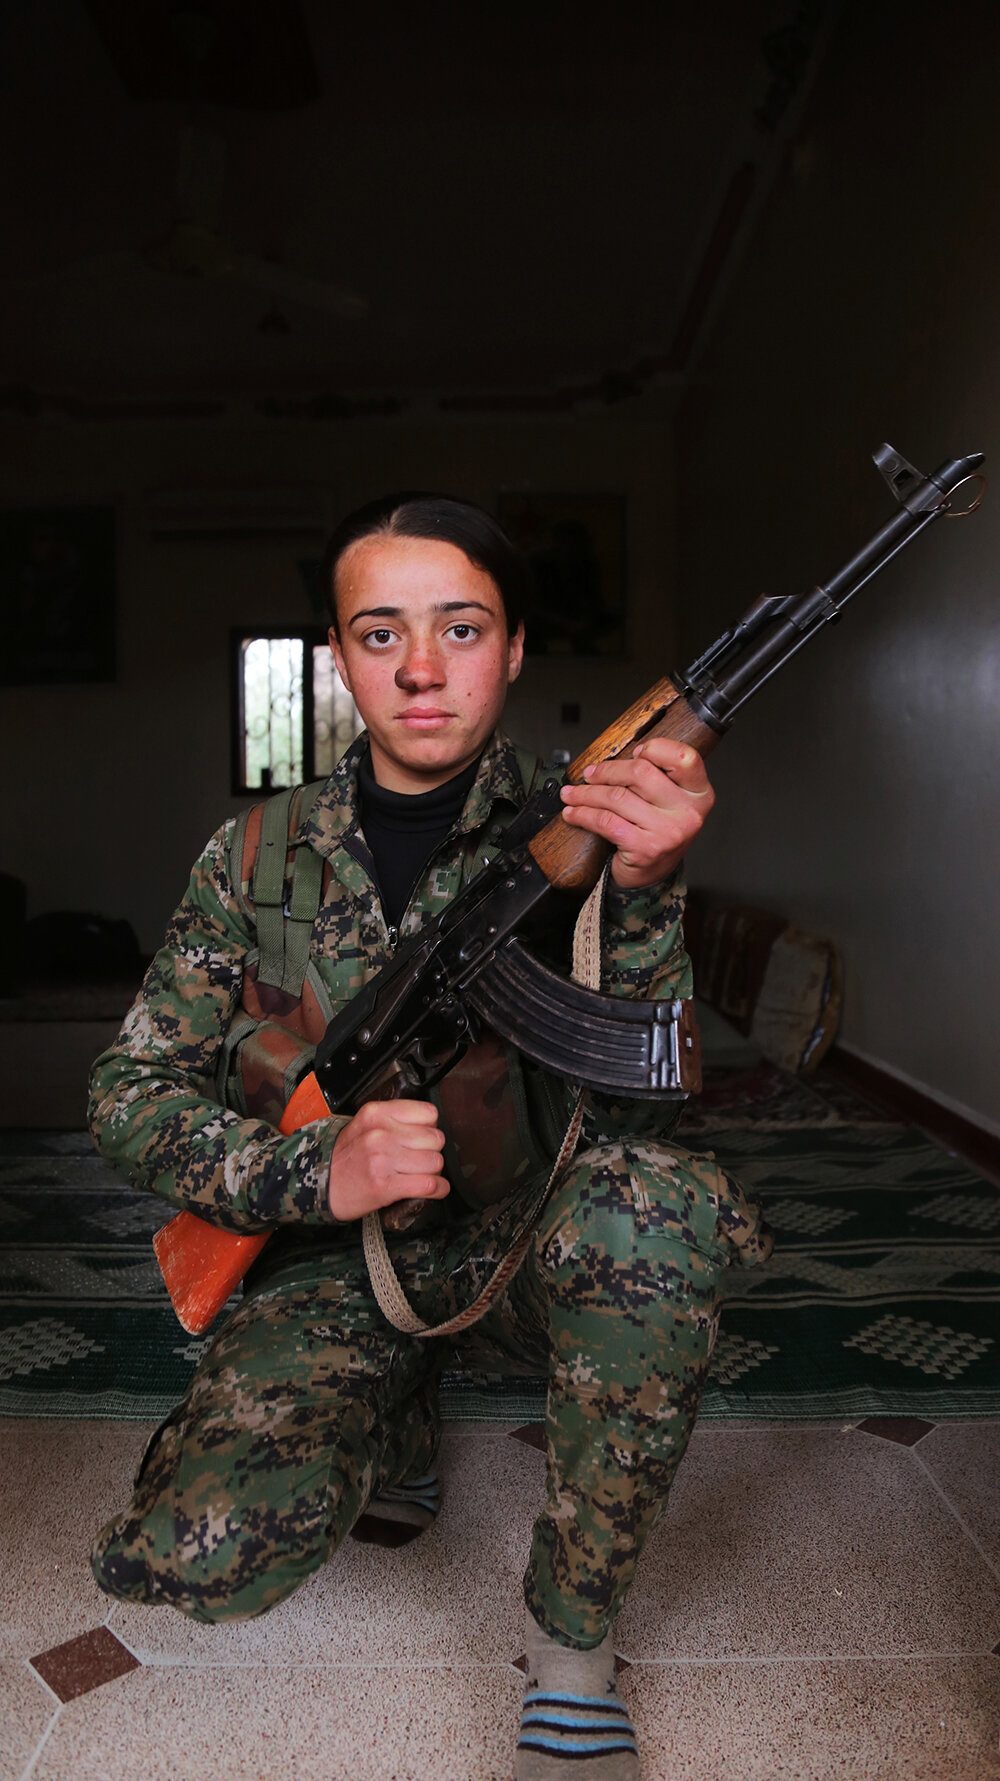 Her War: Women vs. ISIS | Anastasia Trofimova